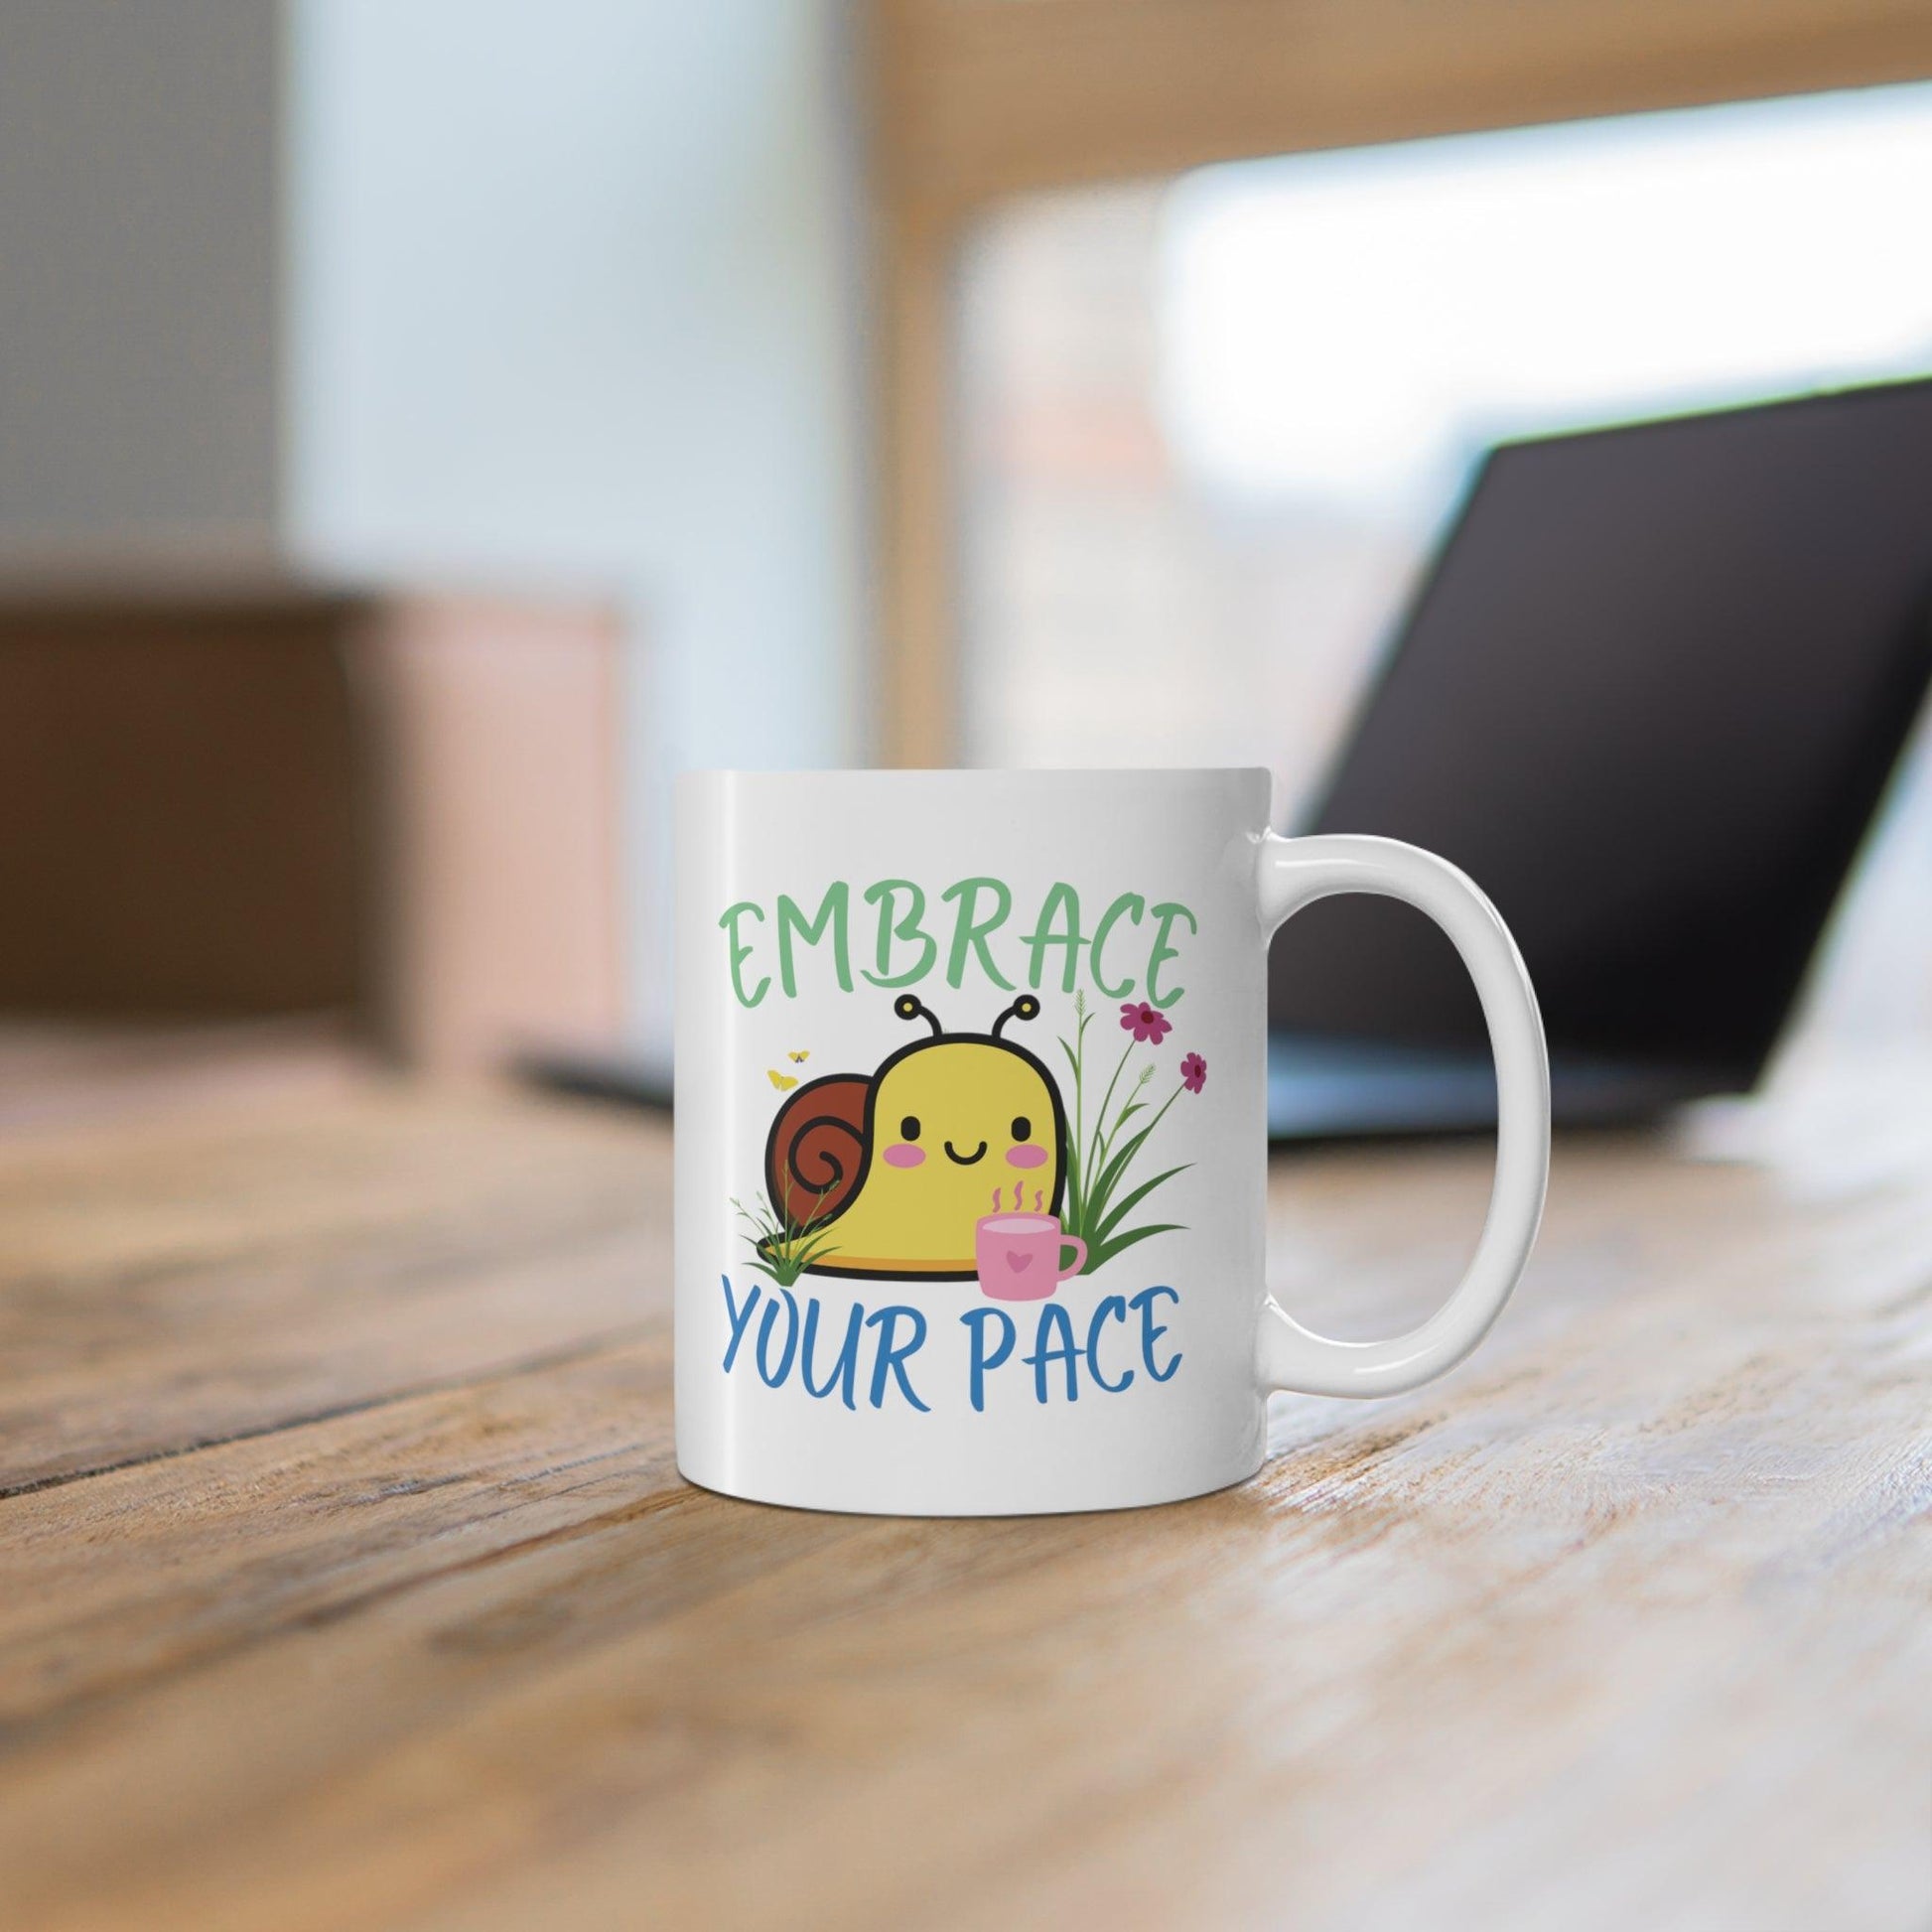 Embrace Your Pace Snail Mug - Cute Cartoon Design for ADHD Awareness - Fidget and Focus